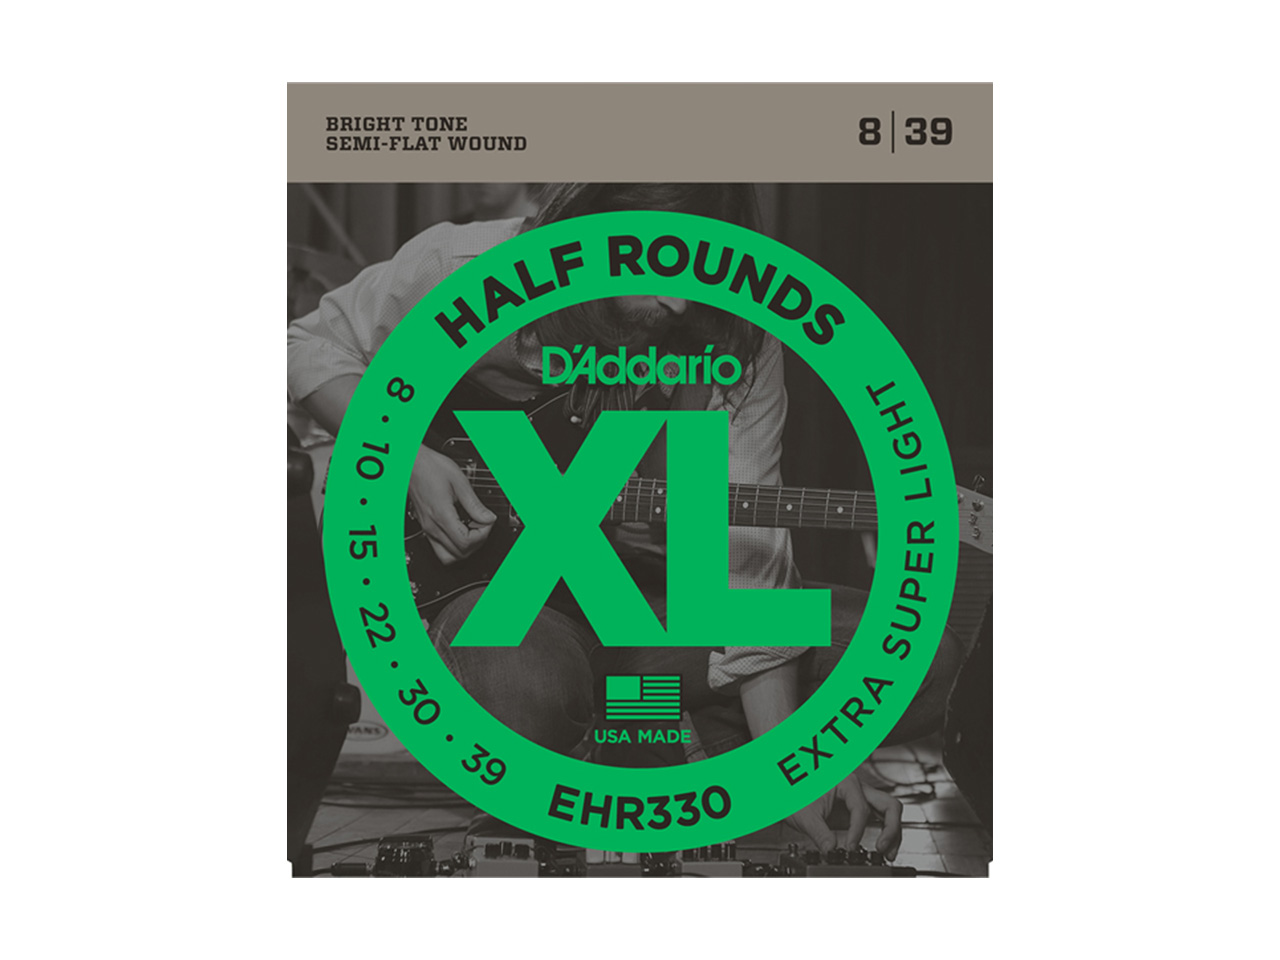 D'Addario(ダダリオ) XL Half Rounds Extra-Super Light / EHR330 (エレキギター弦)